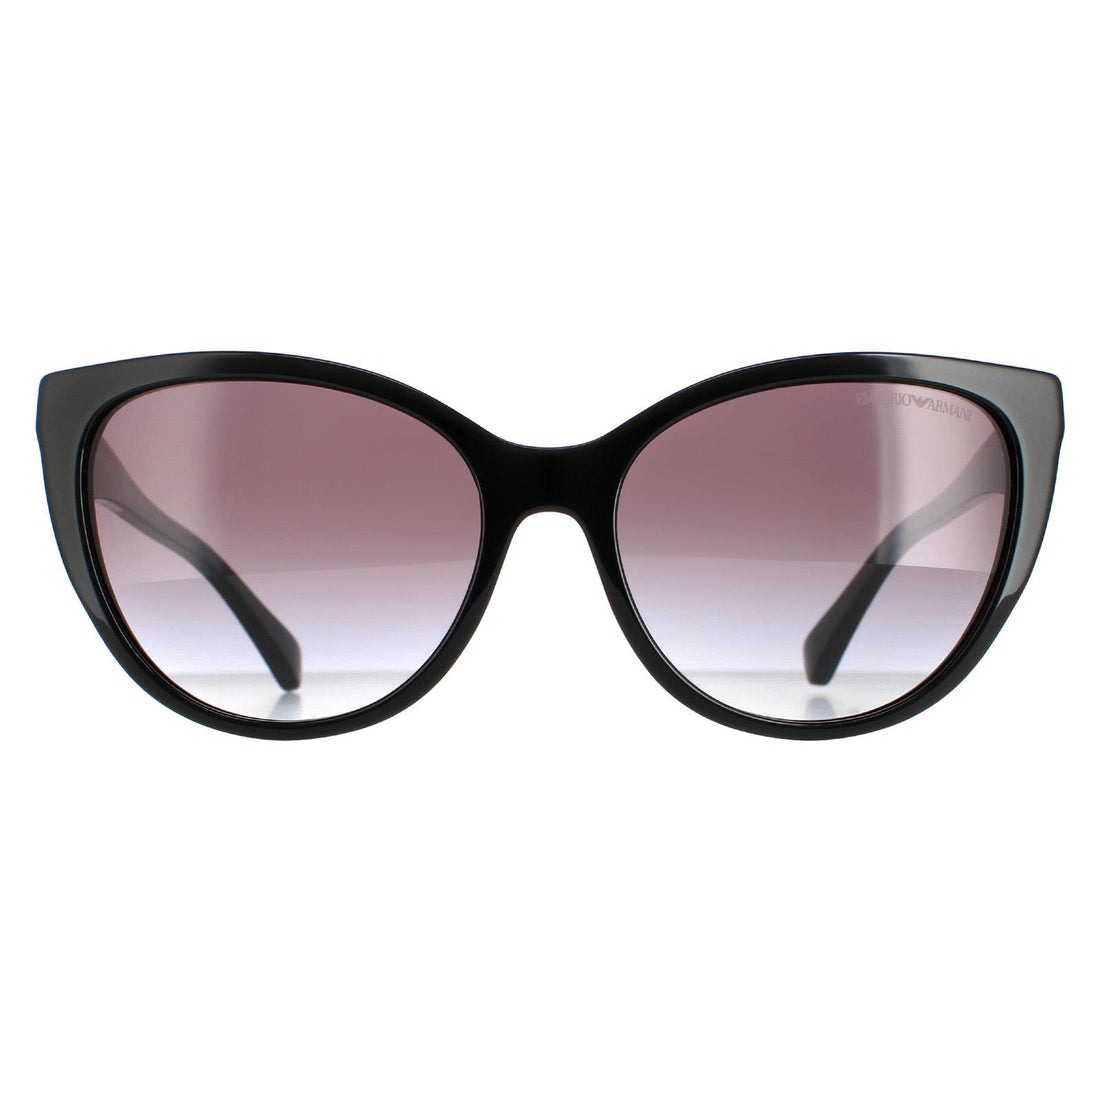 Emporio Armani EA4162 Sunglasses Black / Grey Gradient